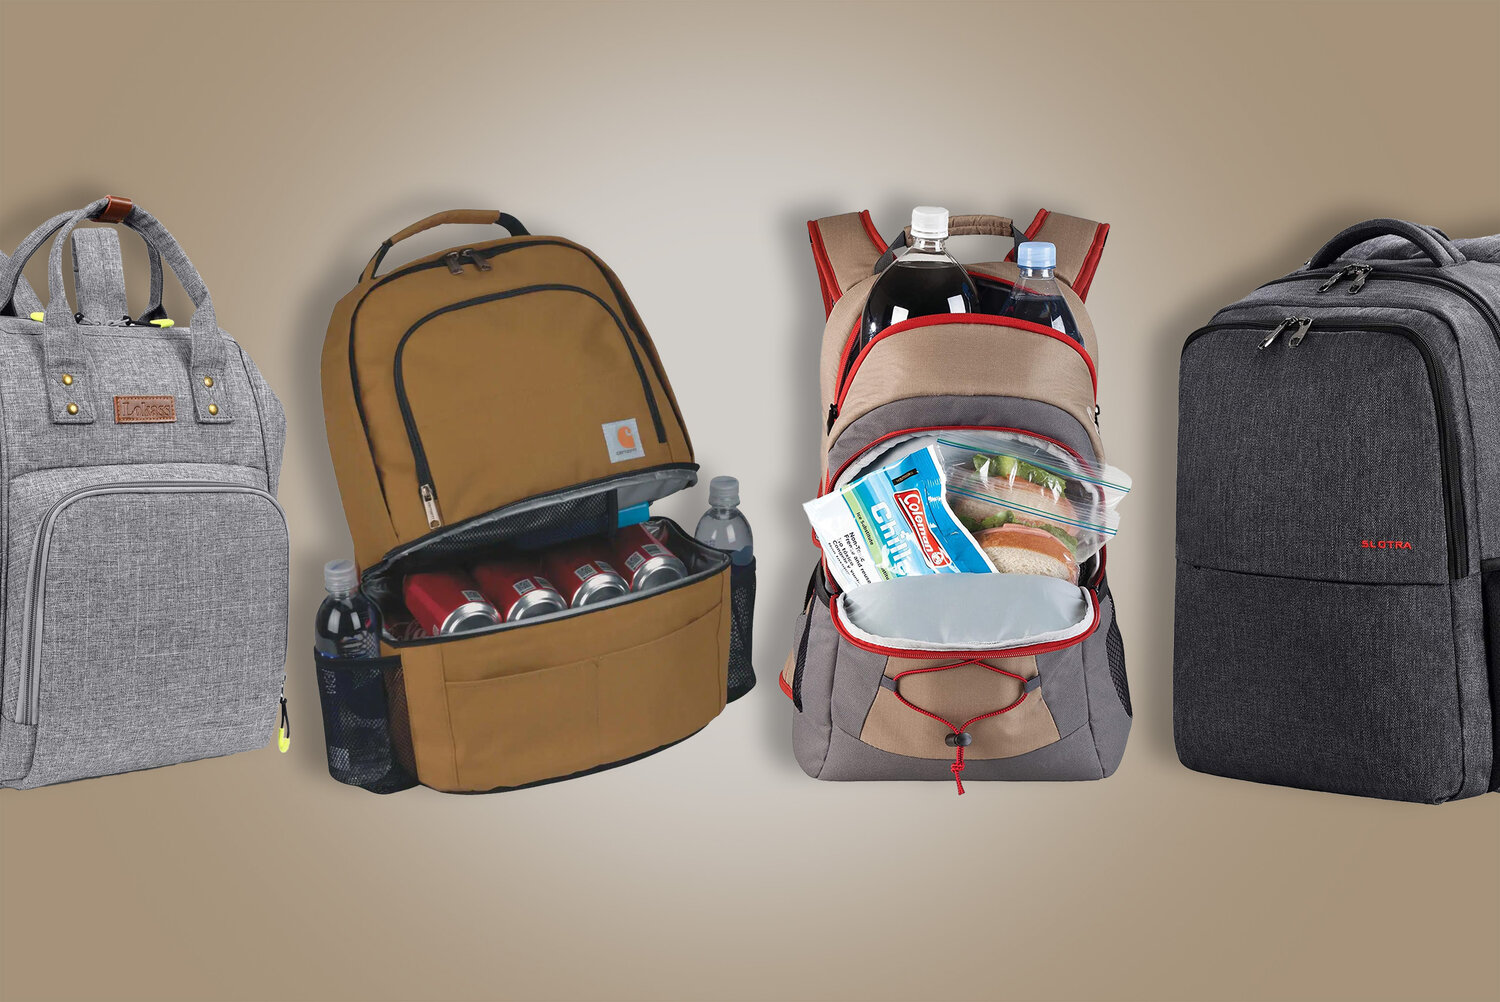 https://images.squarespace-cdn.com/content/v1/583335f52994ca7d6adc6f3d/1605726845500-NIJM2OGAZU7BONQB3MCY/best-lunch-box-backpack-for-adults.jpg?format=1500w